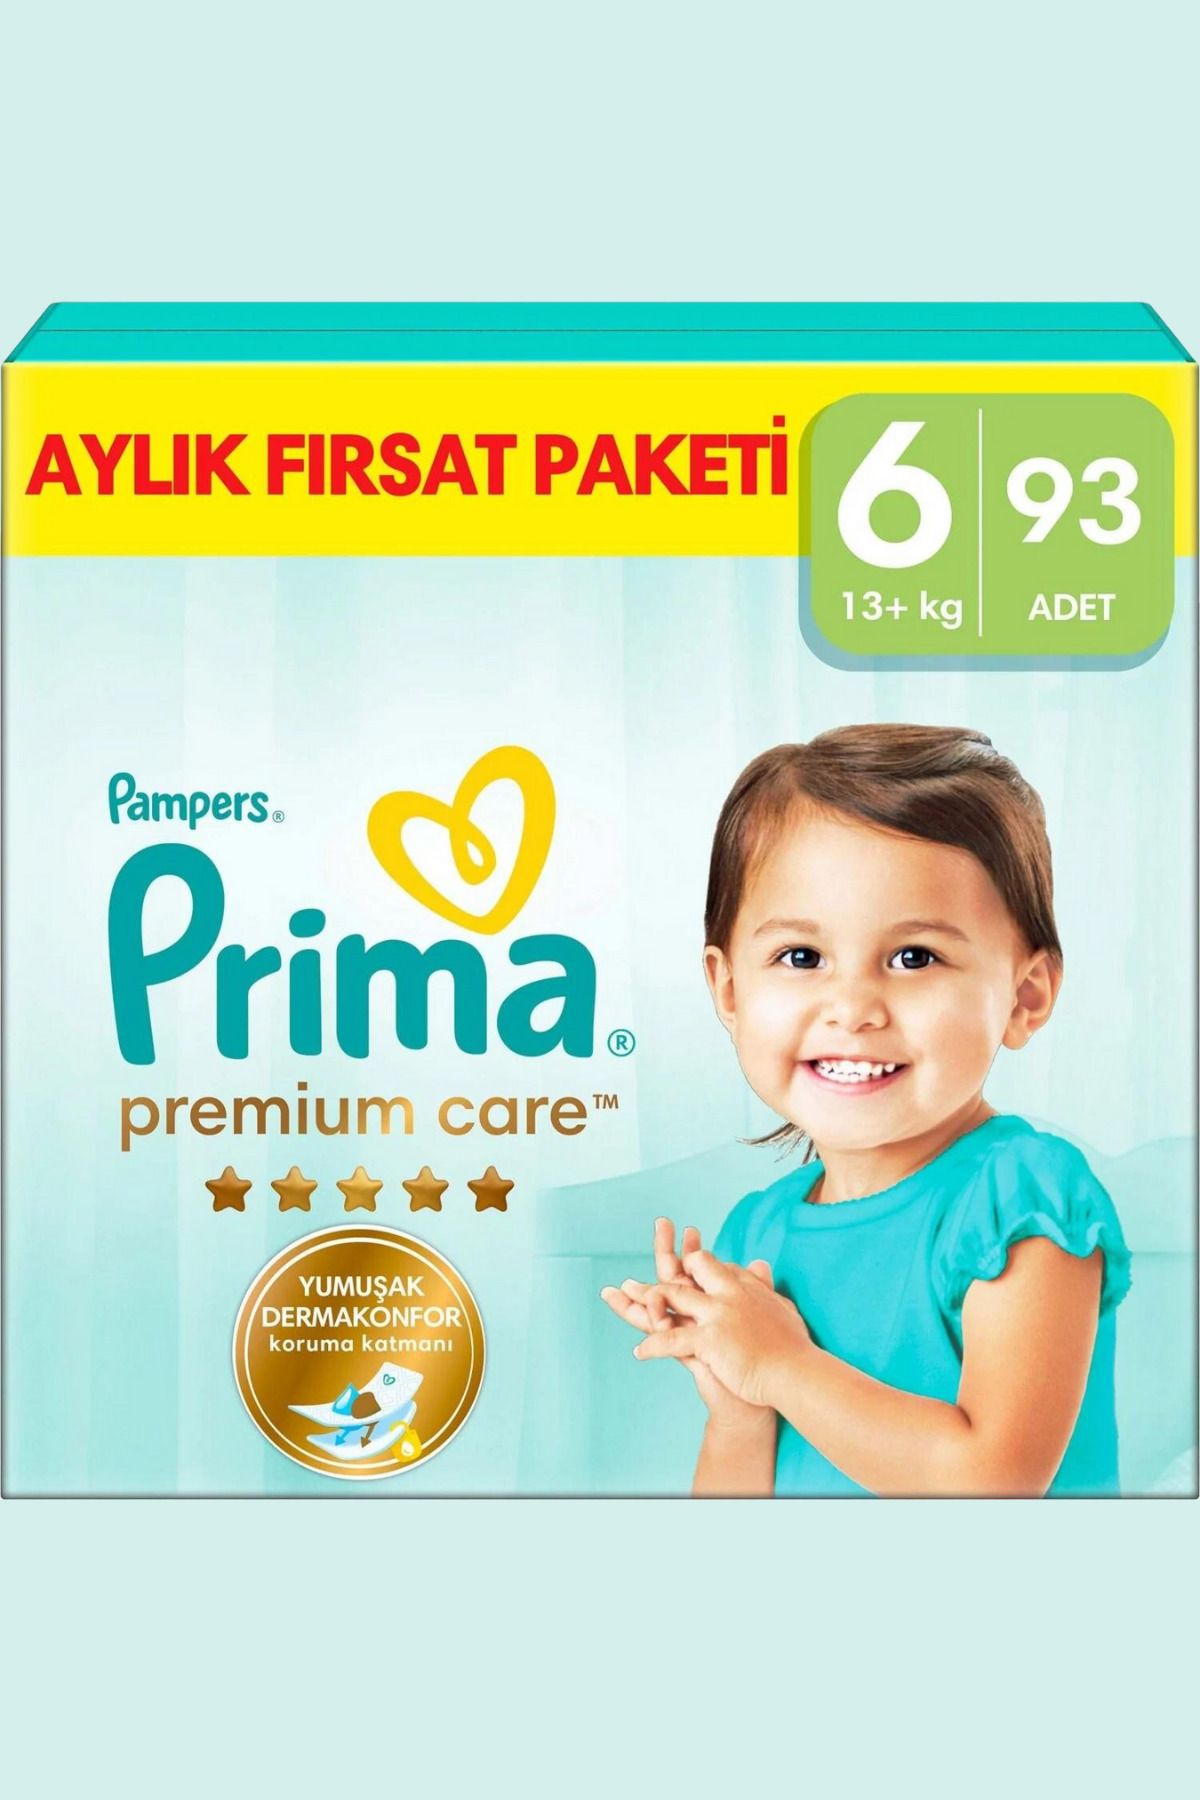 Prima Premium Care Bebek Bezi 6 Numara 93 Adet 13 Kg Aylık Fırsat Paketi